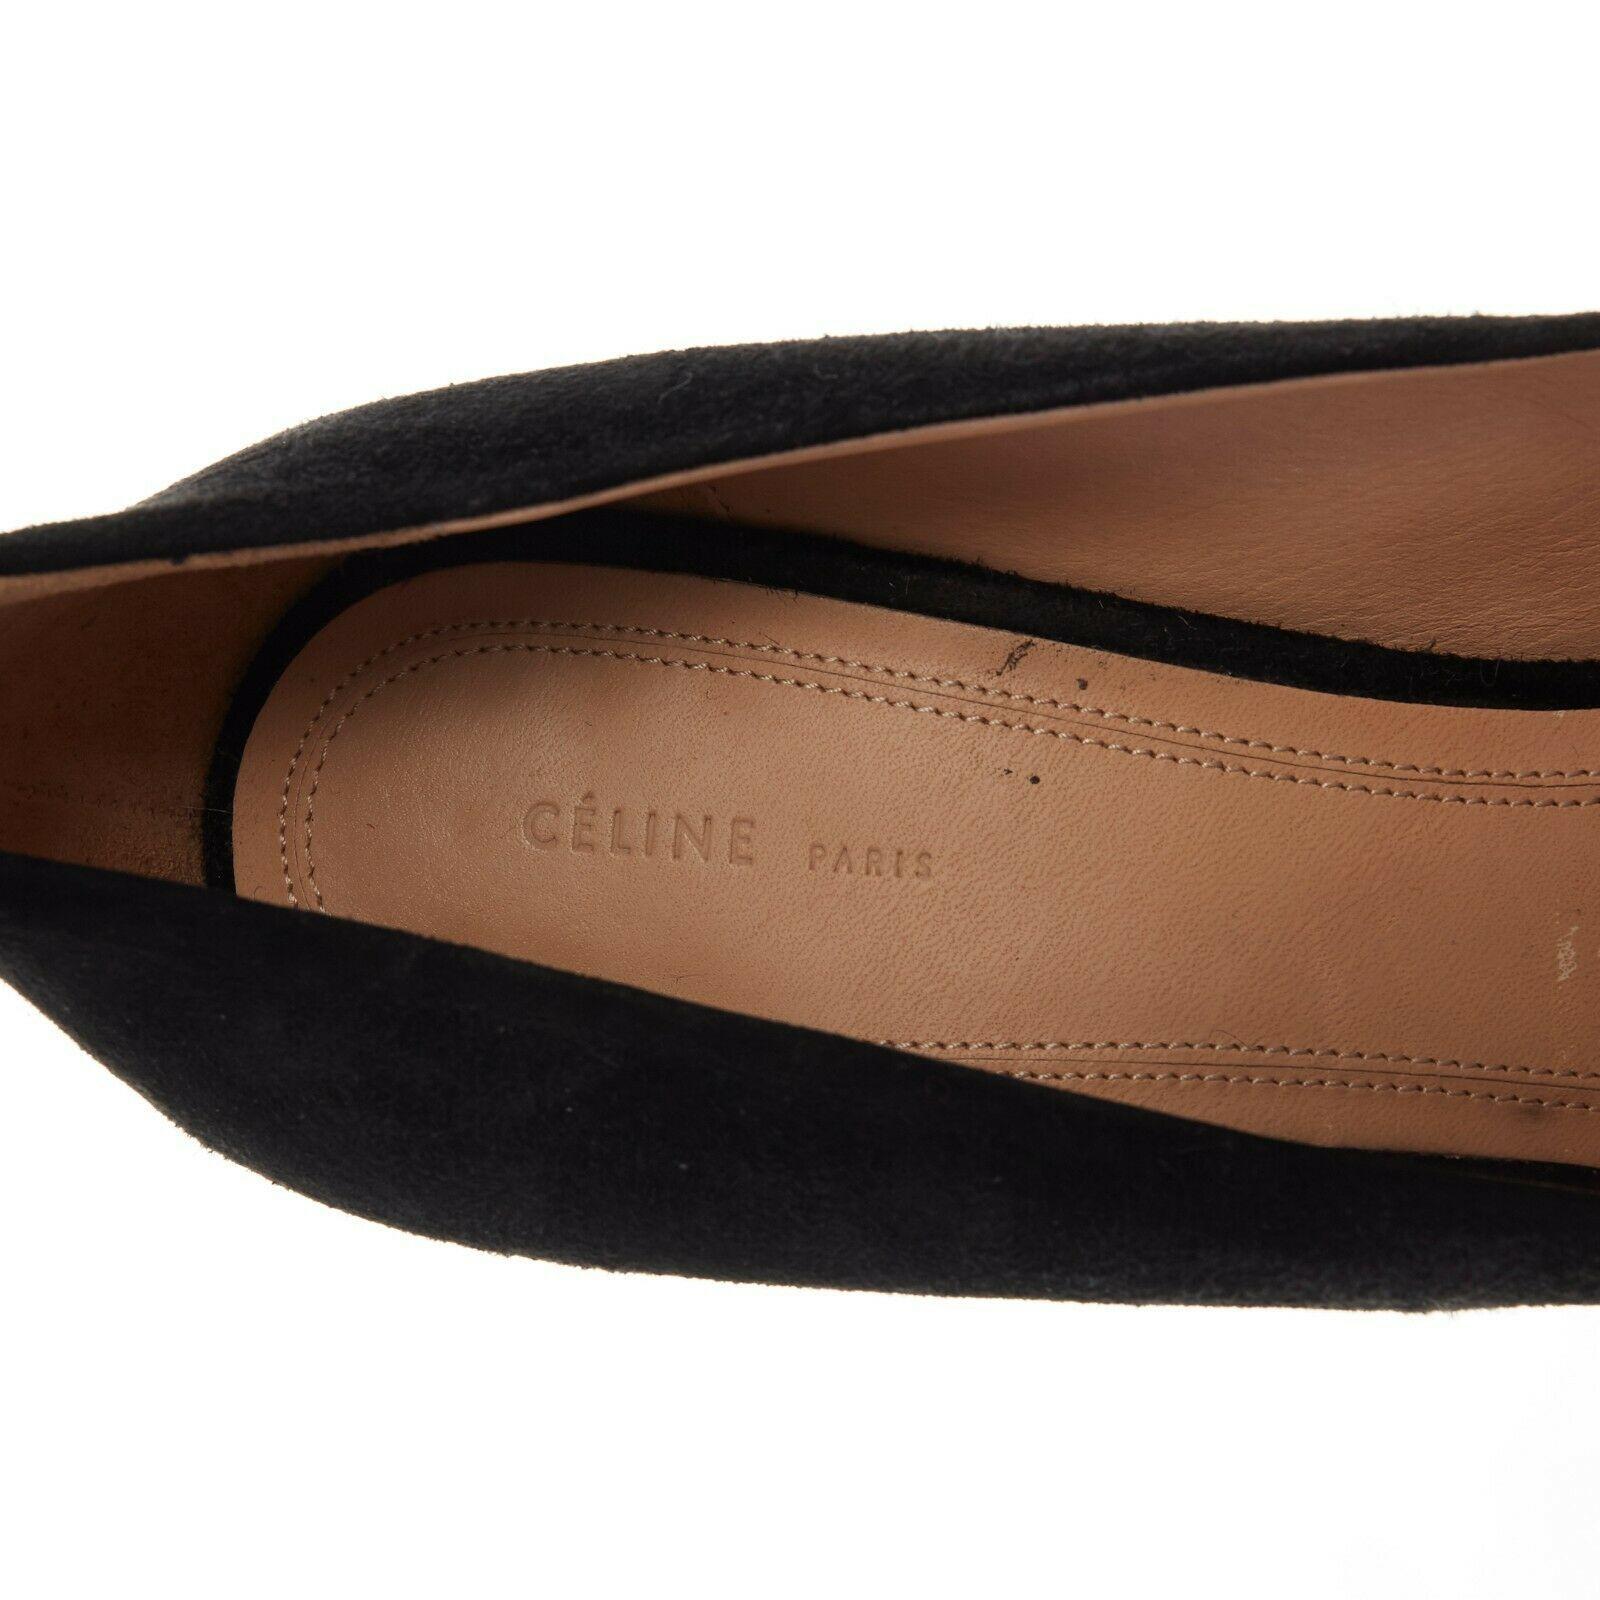 CELINE PHOEBE PHILO black suede red platform wedge wide ankle cuff heels EU38.5 3